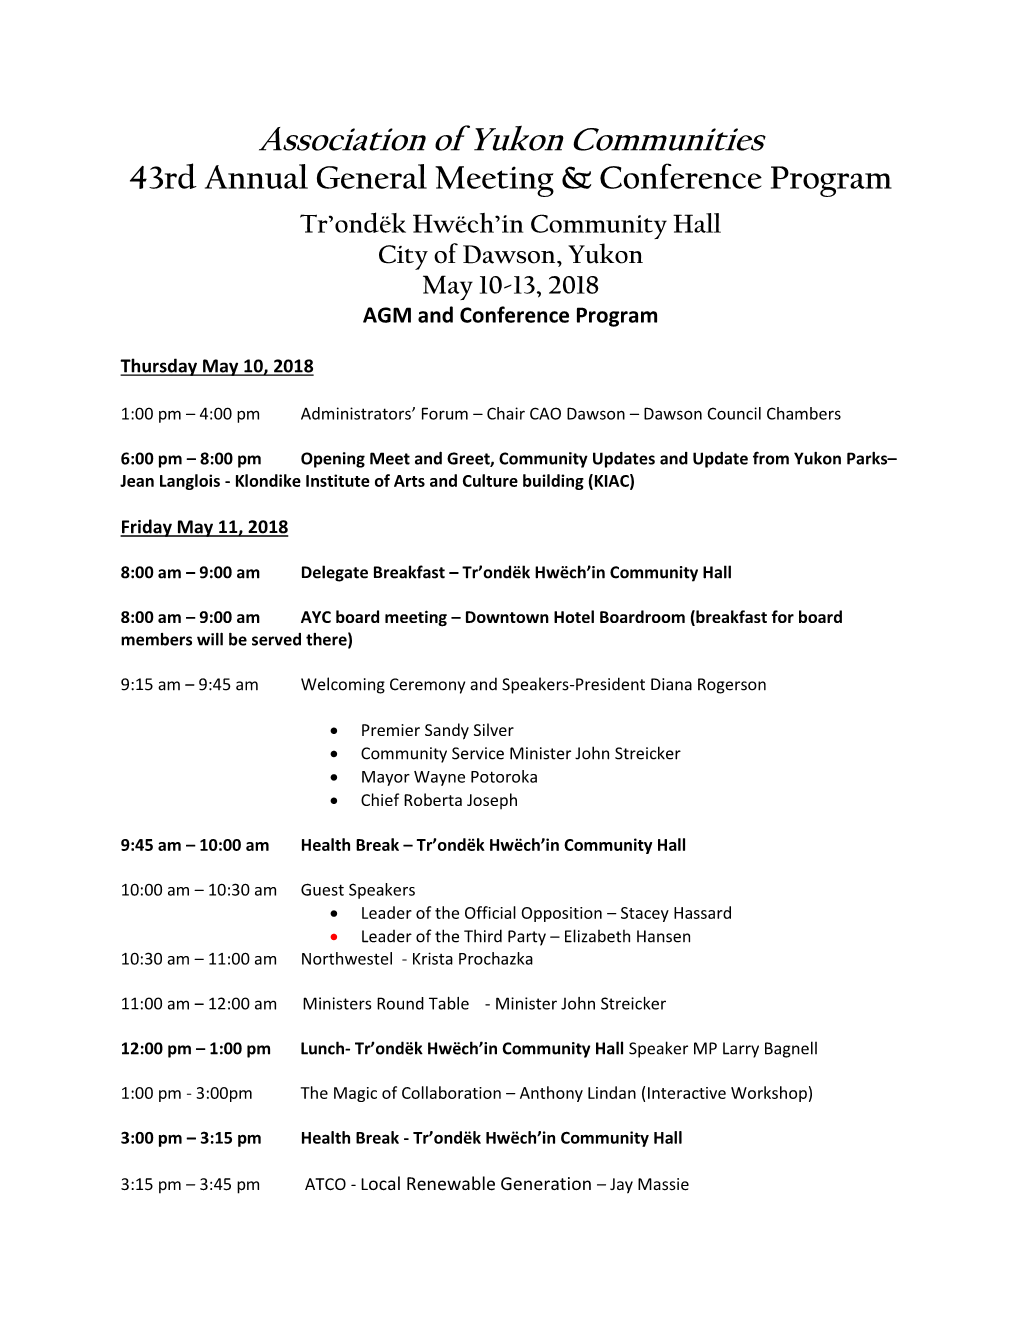 Association of Yukon Communities 43Rd Annual General Meeting & Conference Program